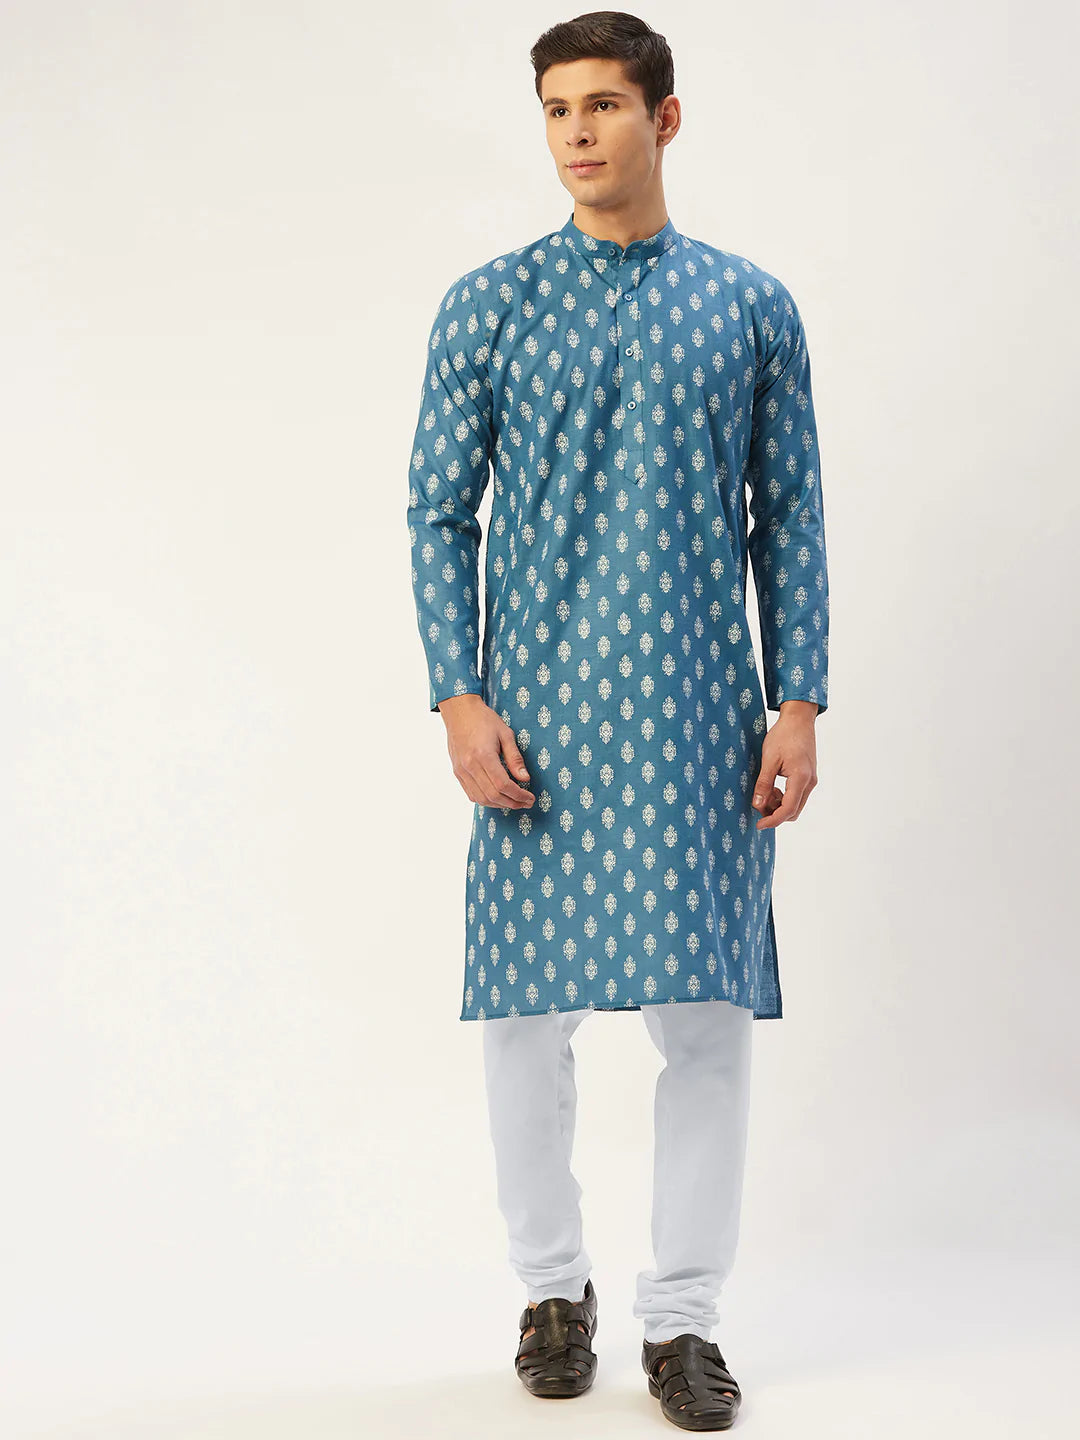 Jompers Men's Teal Cotton Floral printed kurta Pyjama Set ( JOKP 650 Teal )